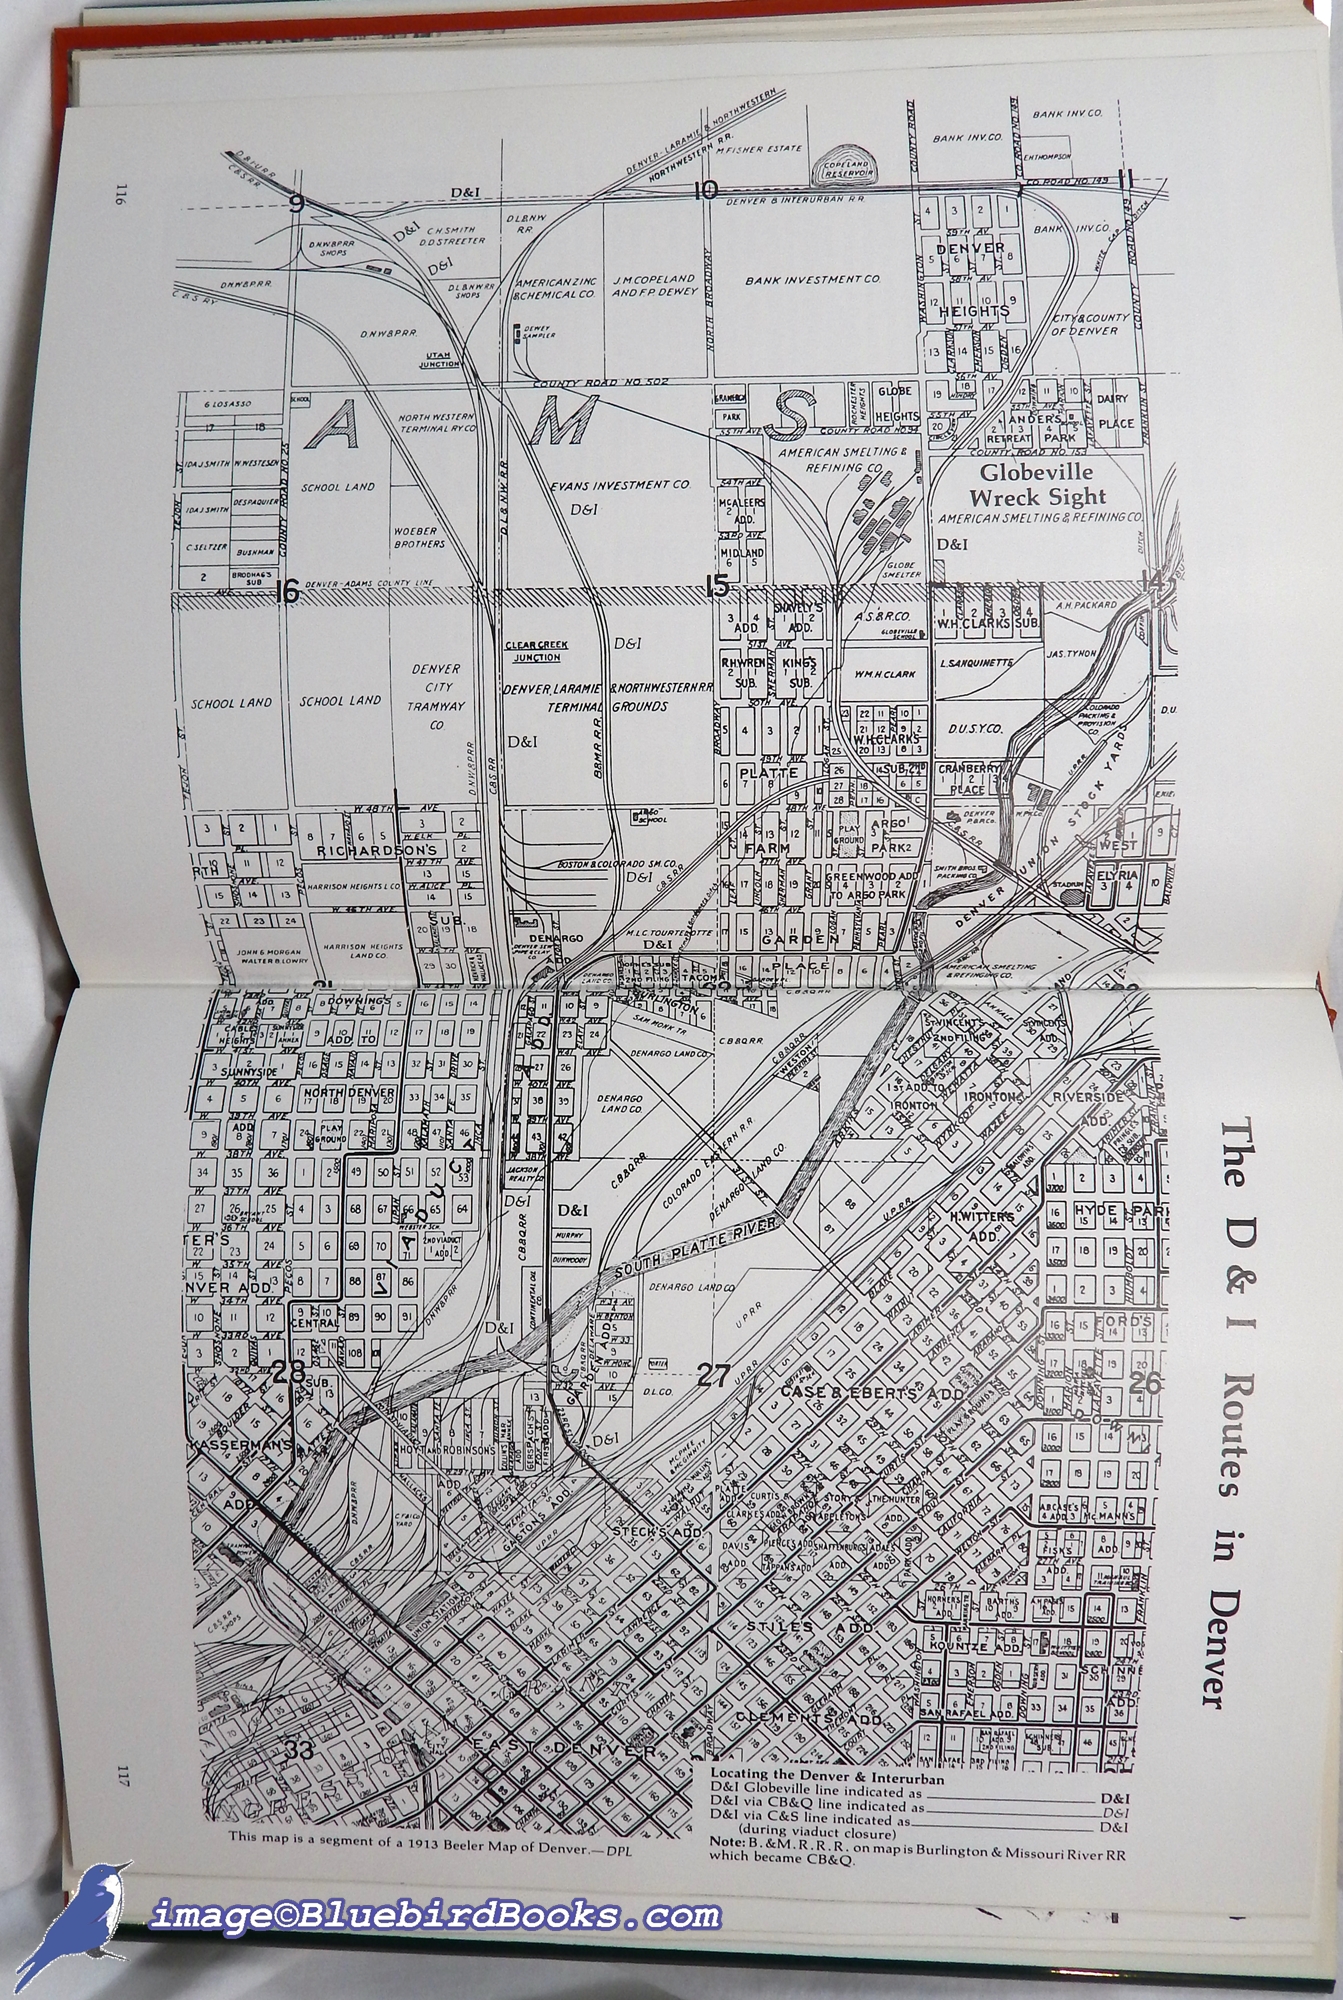 JONES, WILLIAM C.; HOLLEY, NOEL T. - The Kite Route: Story of the Denver & Interurban Railroad